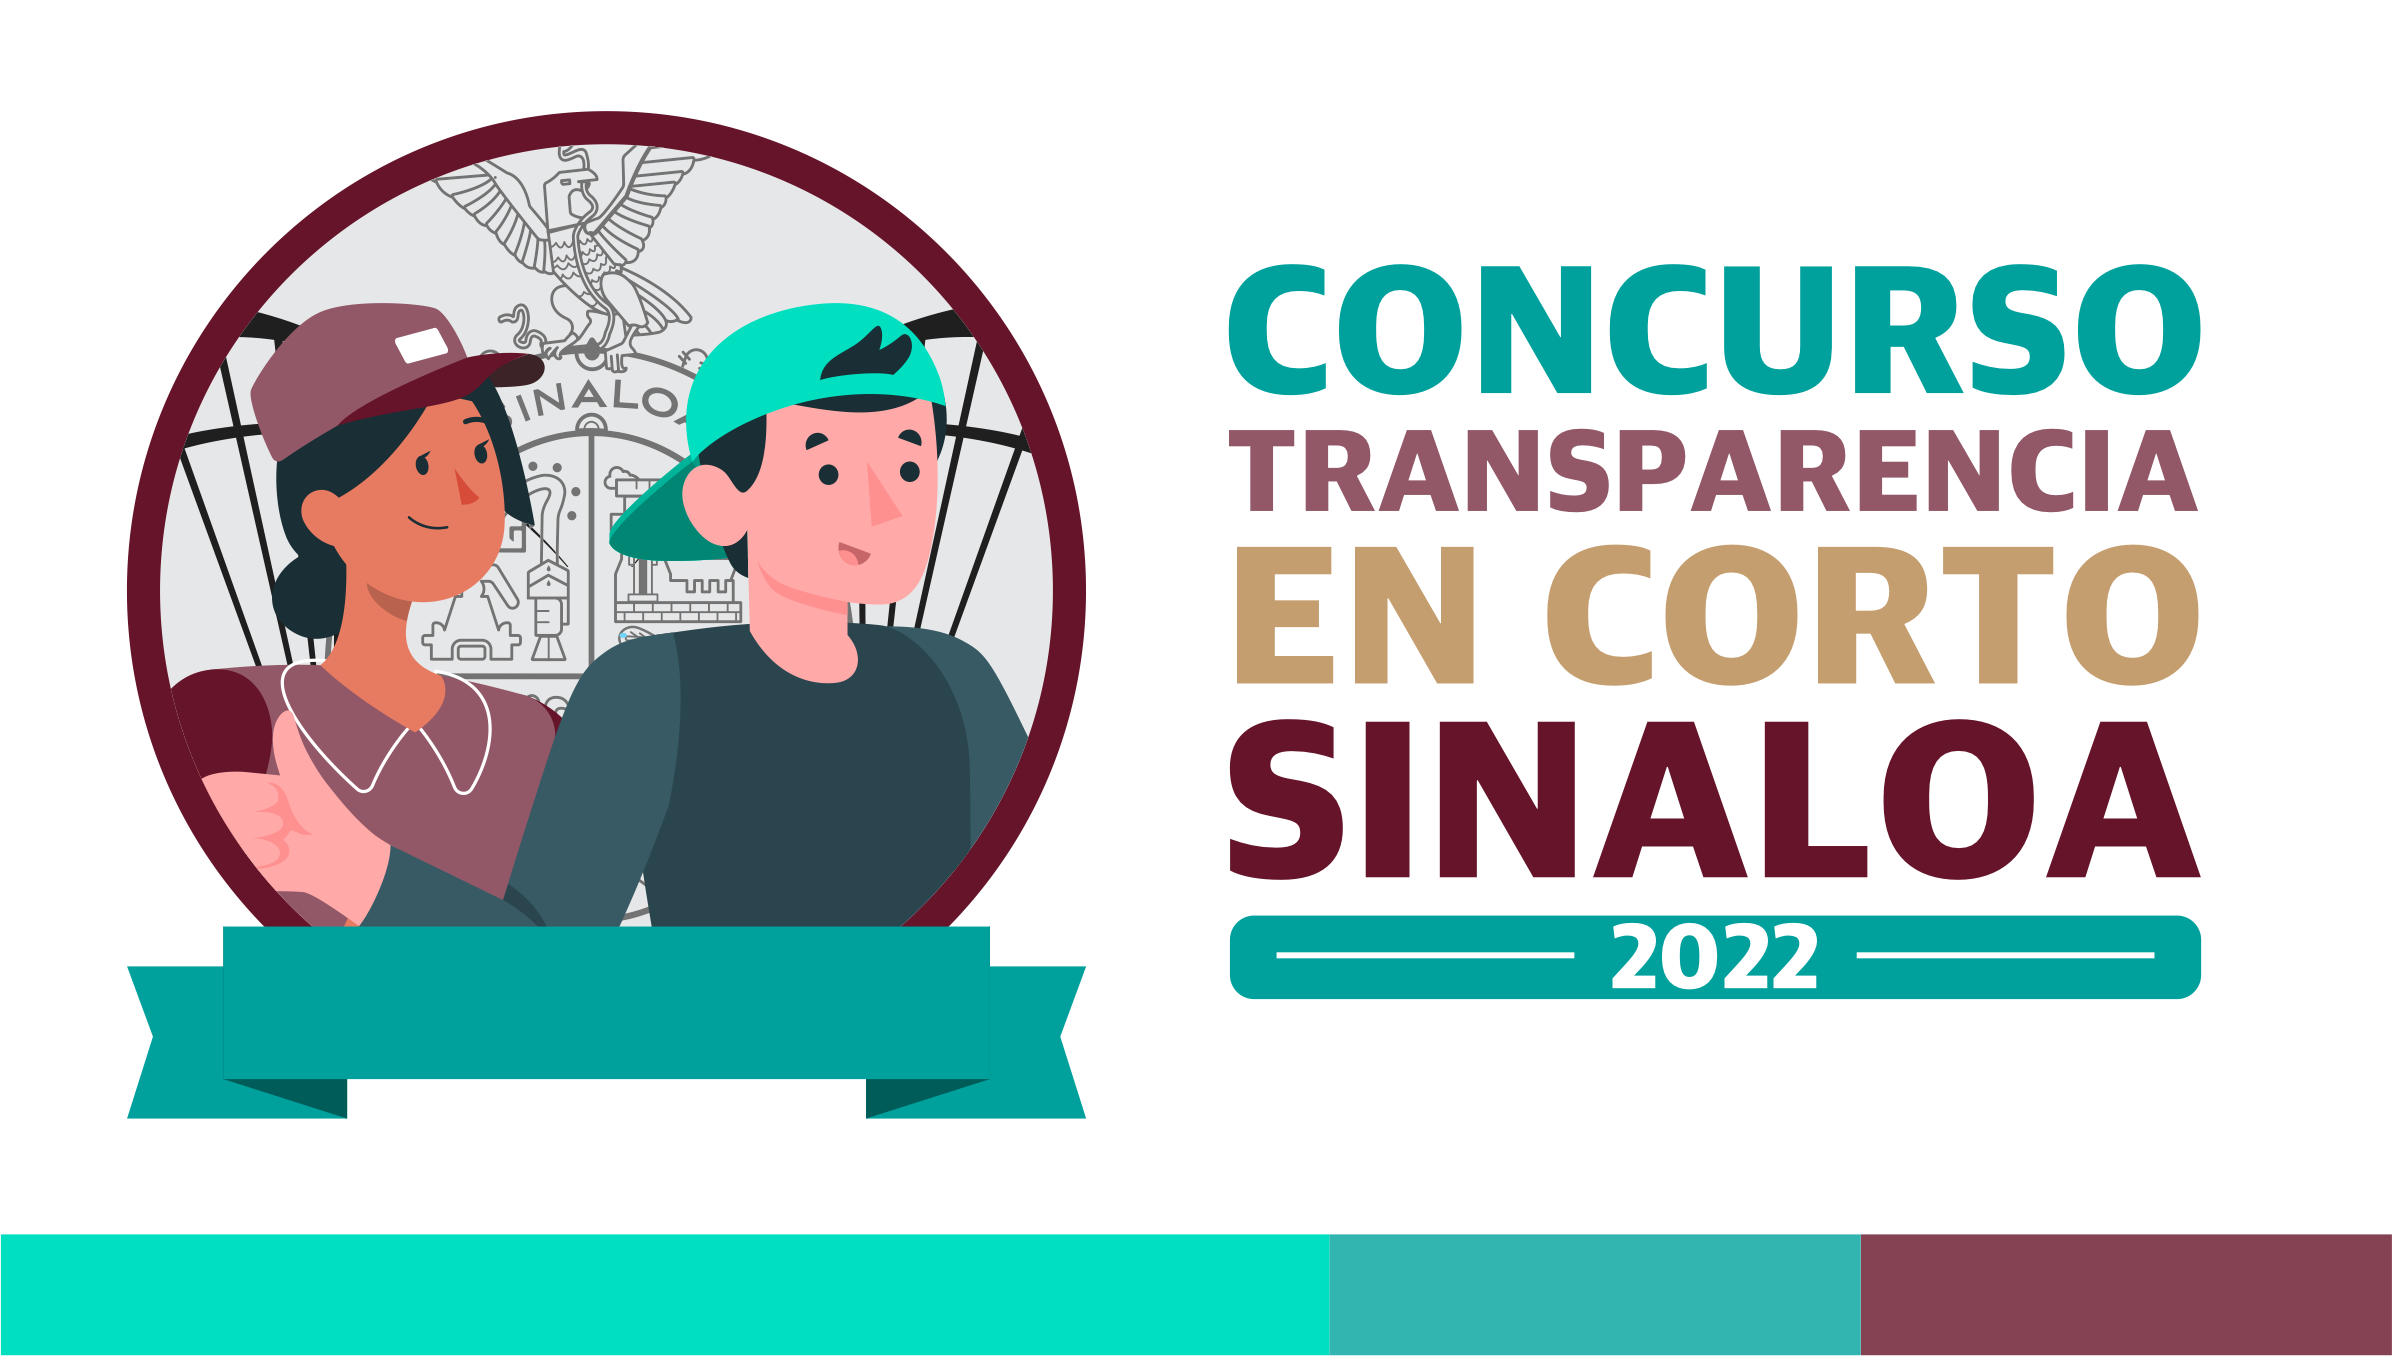 Concurso Transparencia en Corto Sinaloa 2022